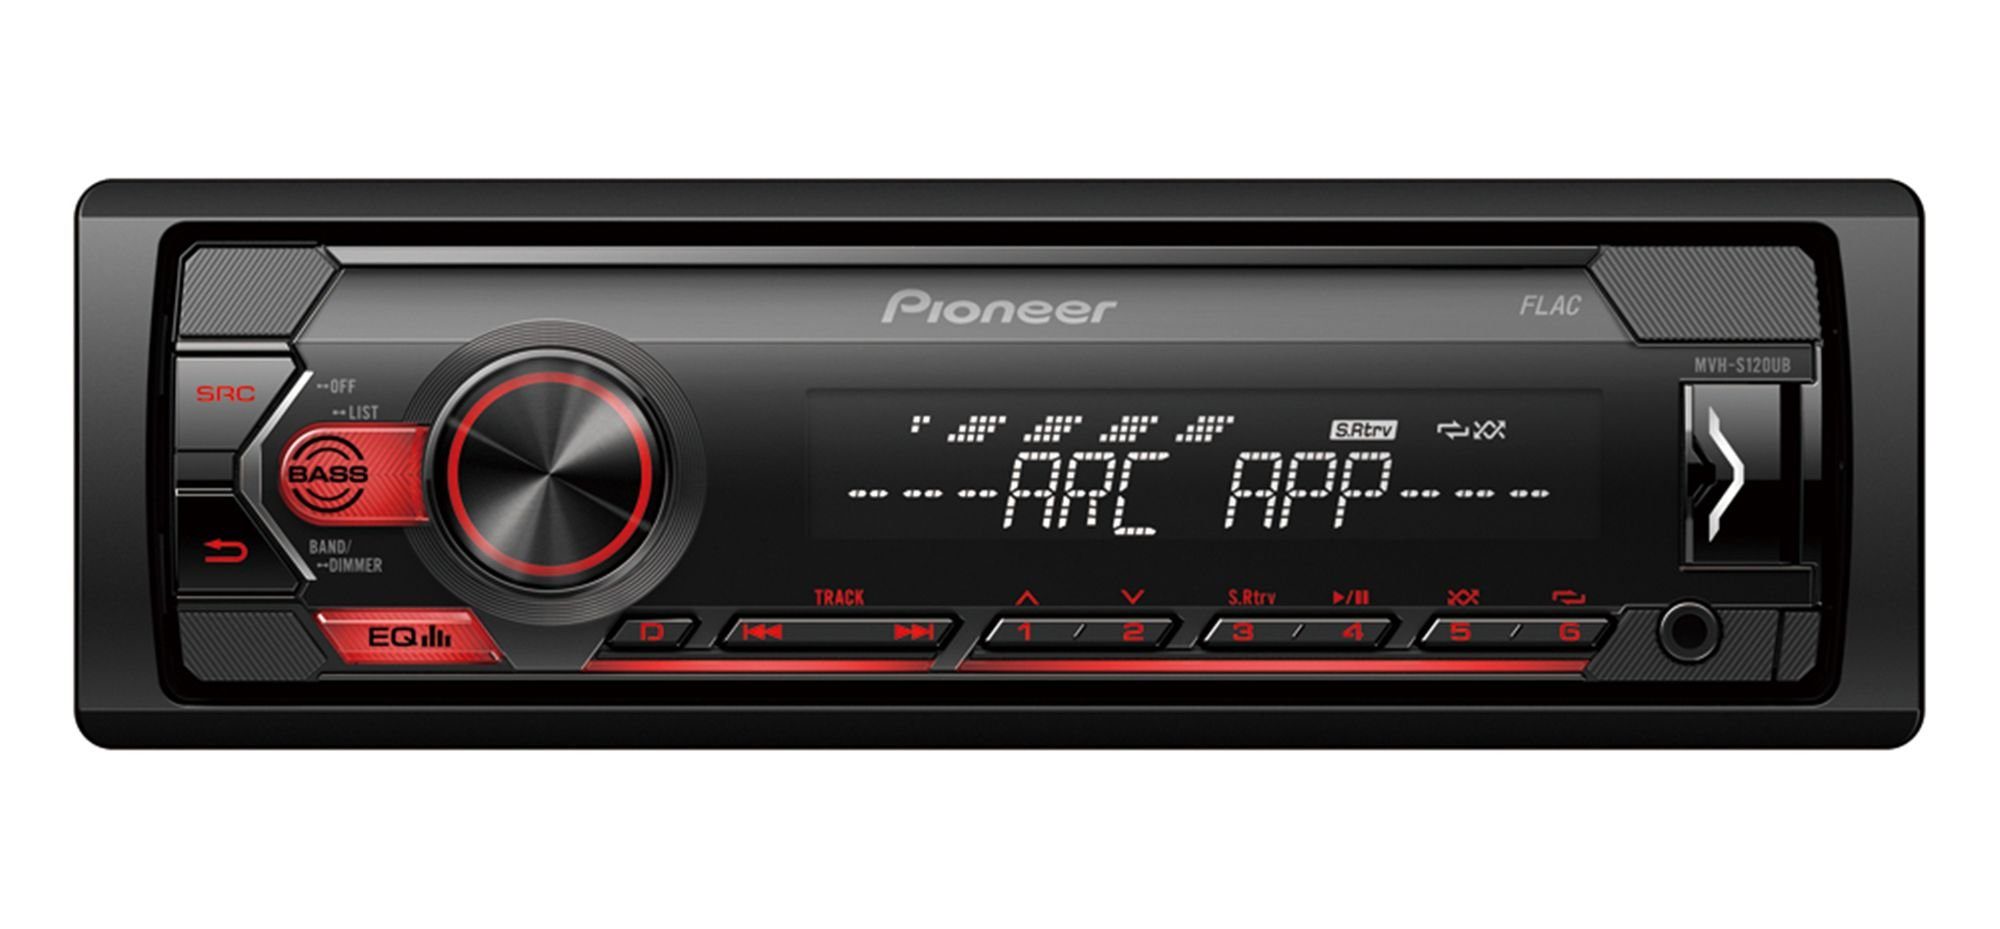 Autoradio MVH-S120UB AuxIn Android MP3 Autoradio USB Pioneer